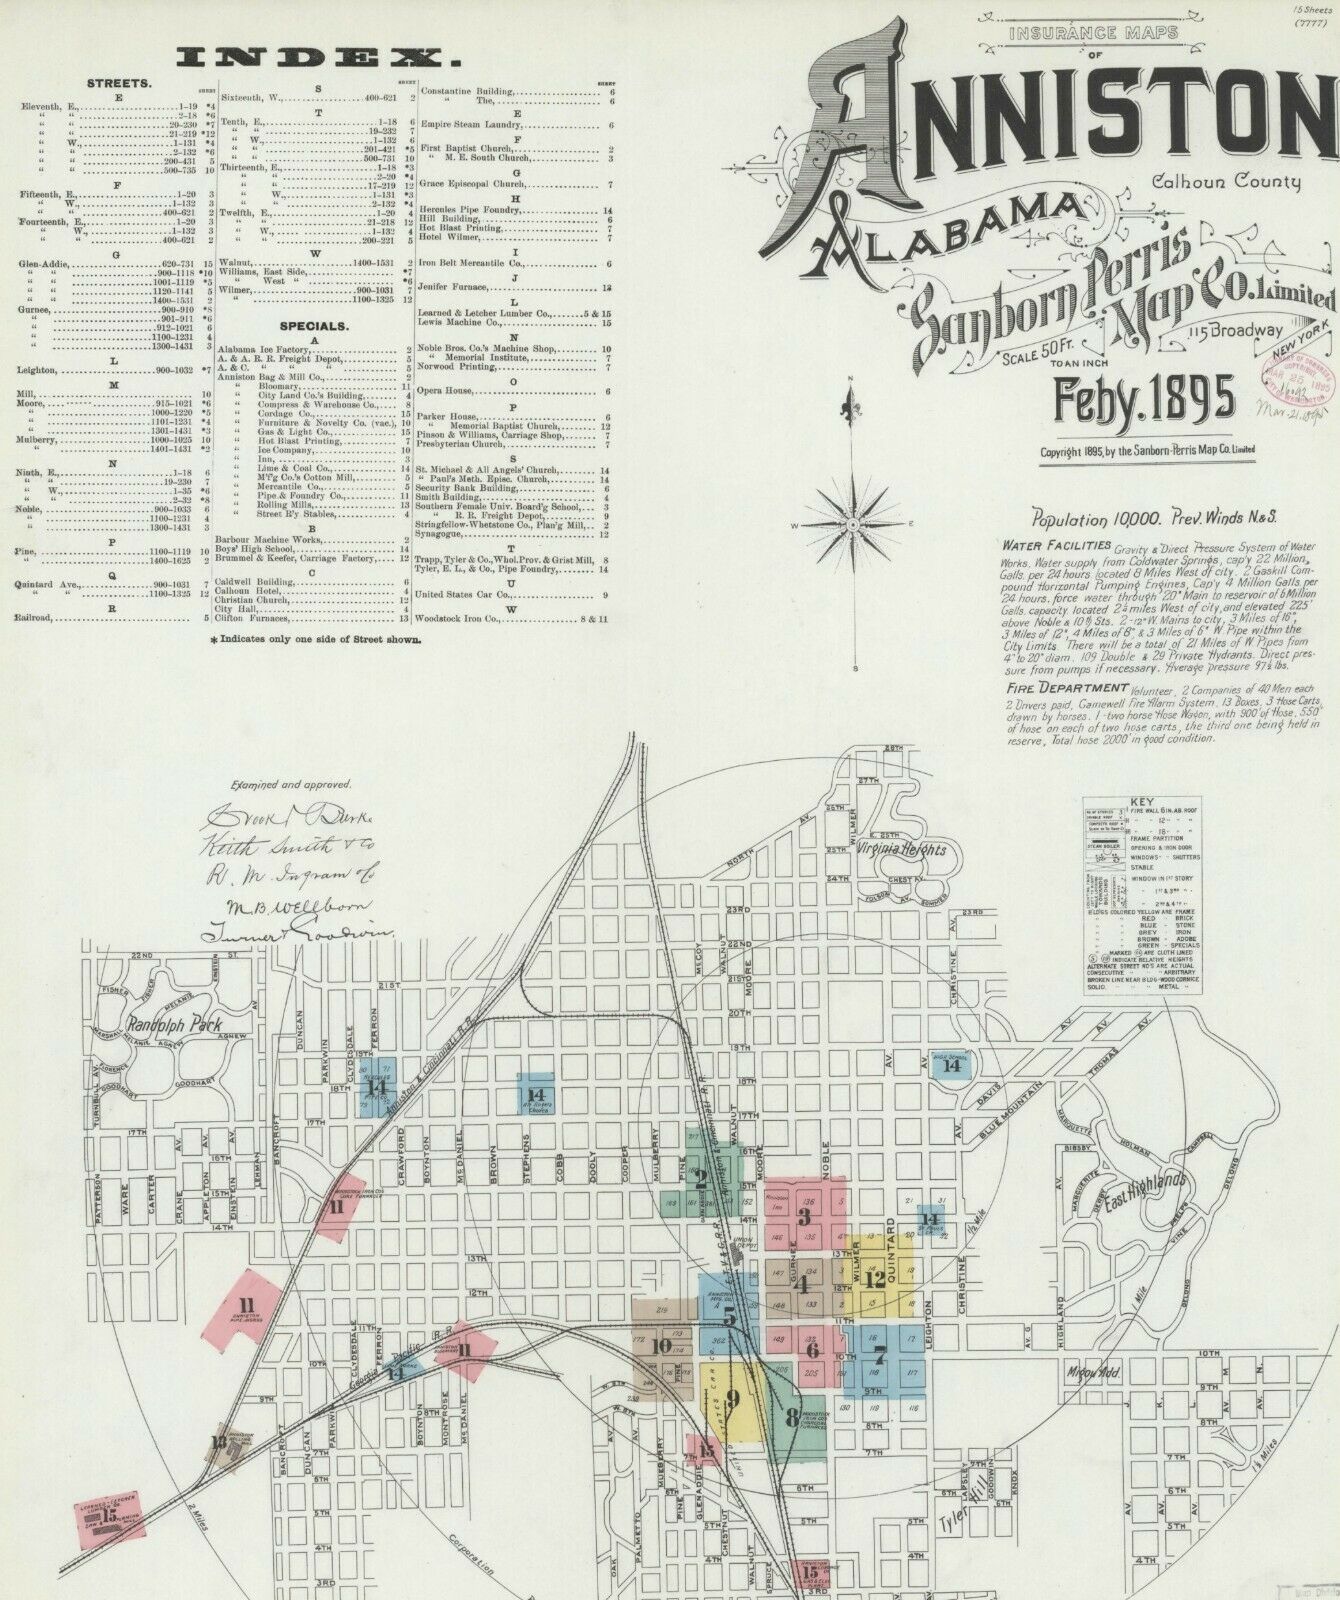 Anniston,  Alabama Sanborn Map© Sheets Made 1885 To 1900~ Cd~ 66 Maps ~ Pdf's